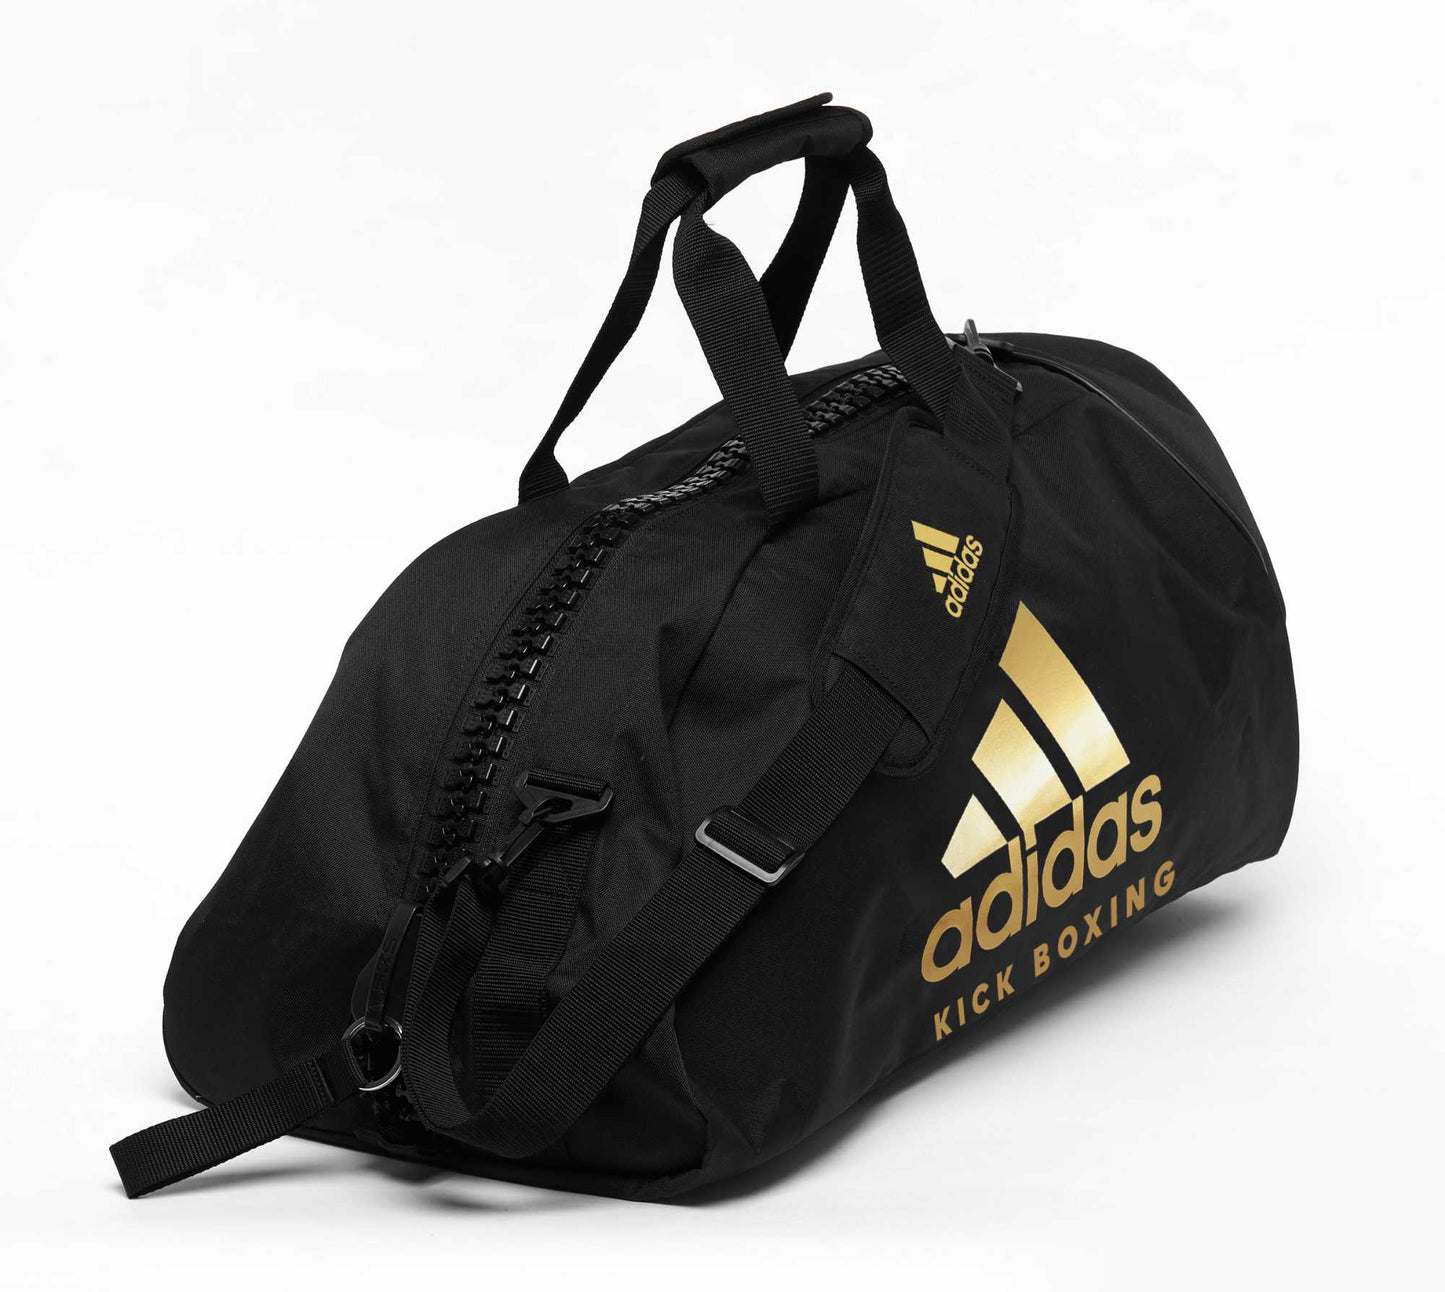 adidas 2in1 Bag Kickboxing schwarz/gold PU, adiACC051KB